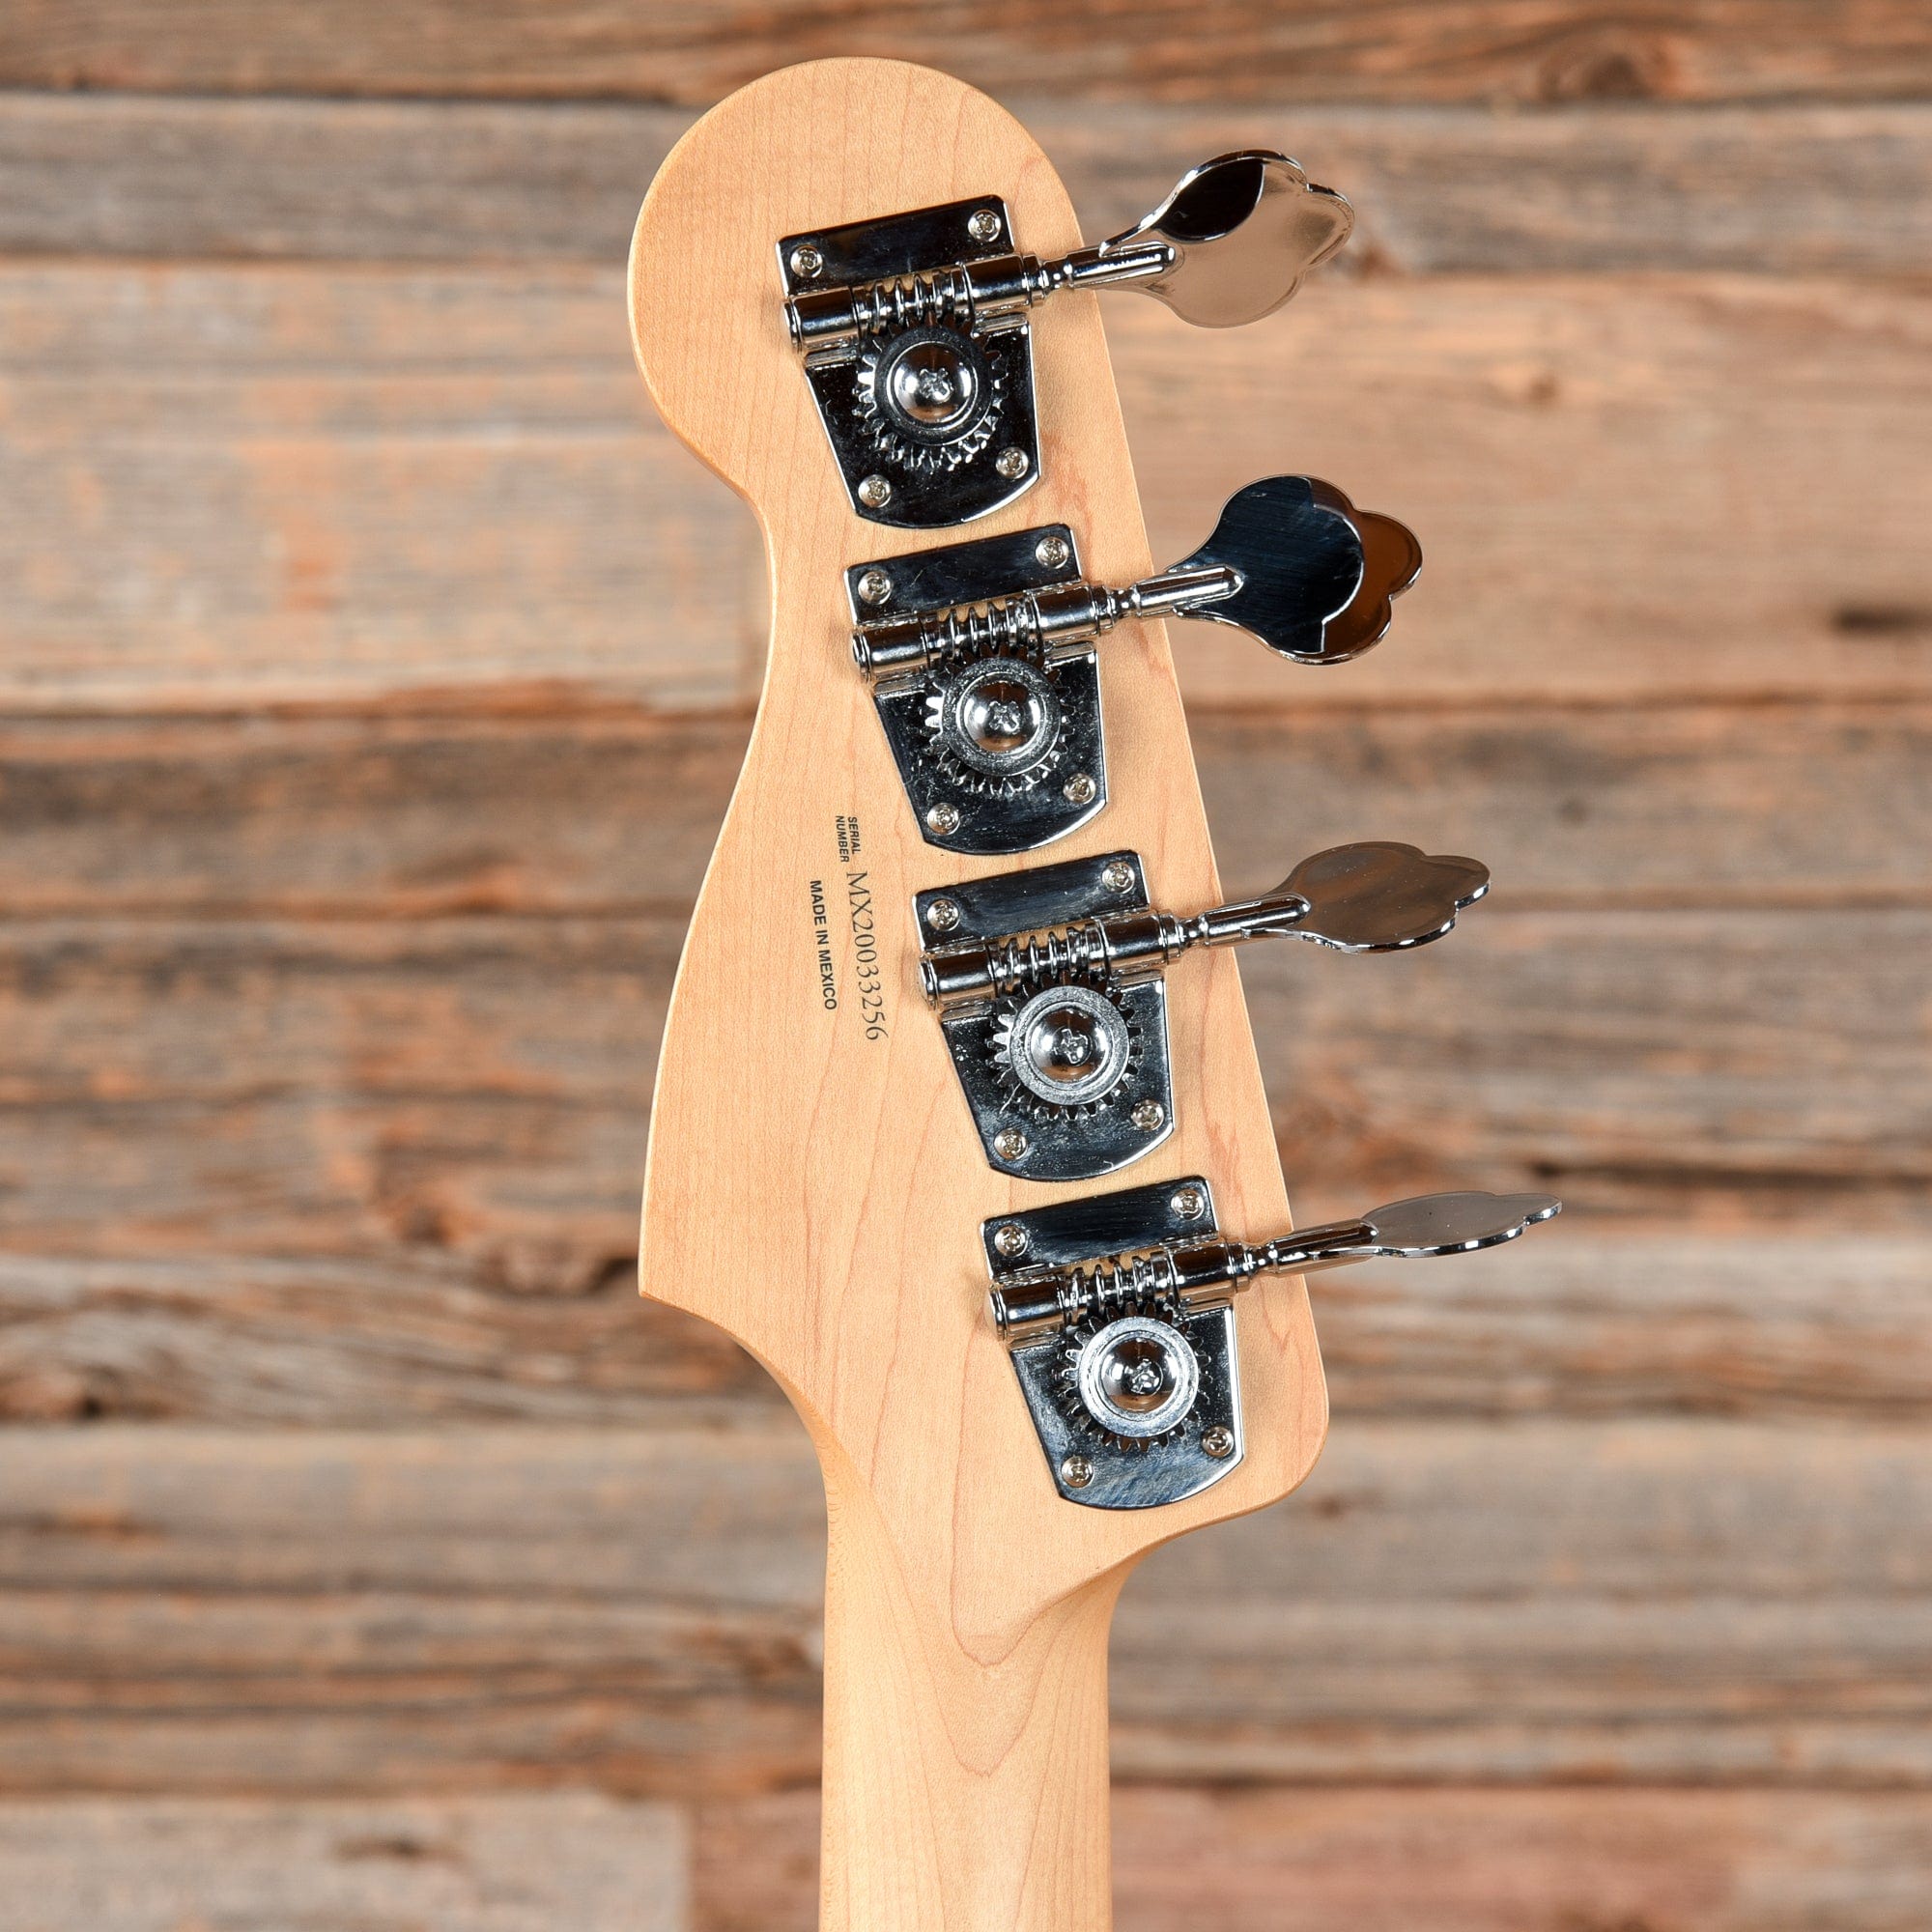 Fender Player Precision Bass Polar White 2020 Bass Guitars / 4-String